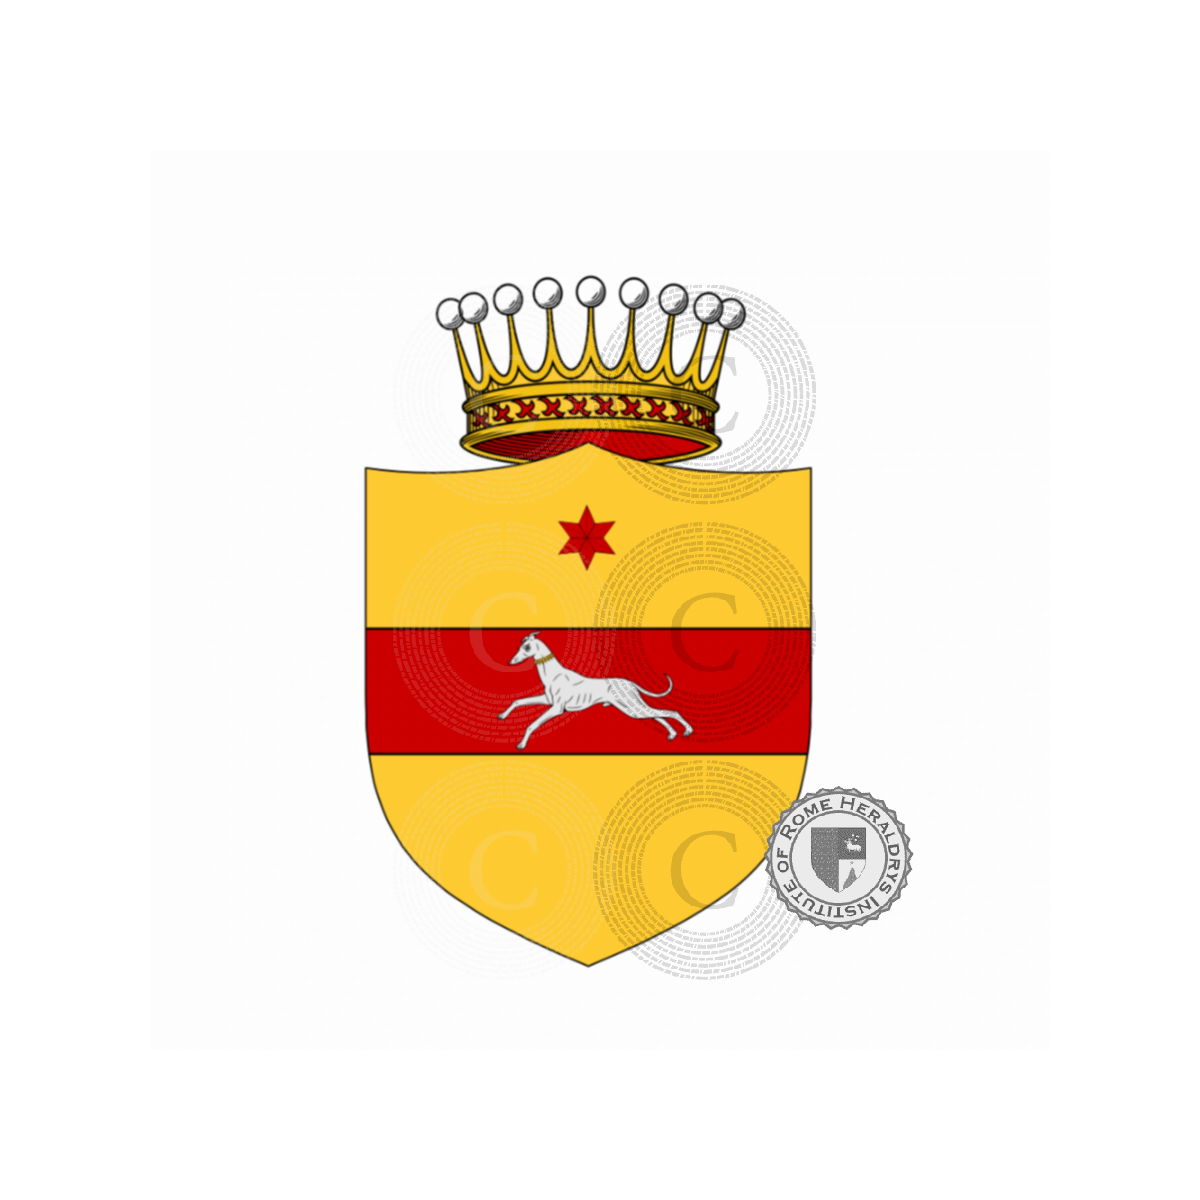 Coat of arms of familyVallisneri